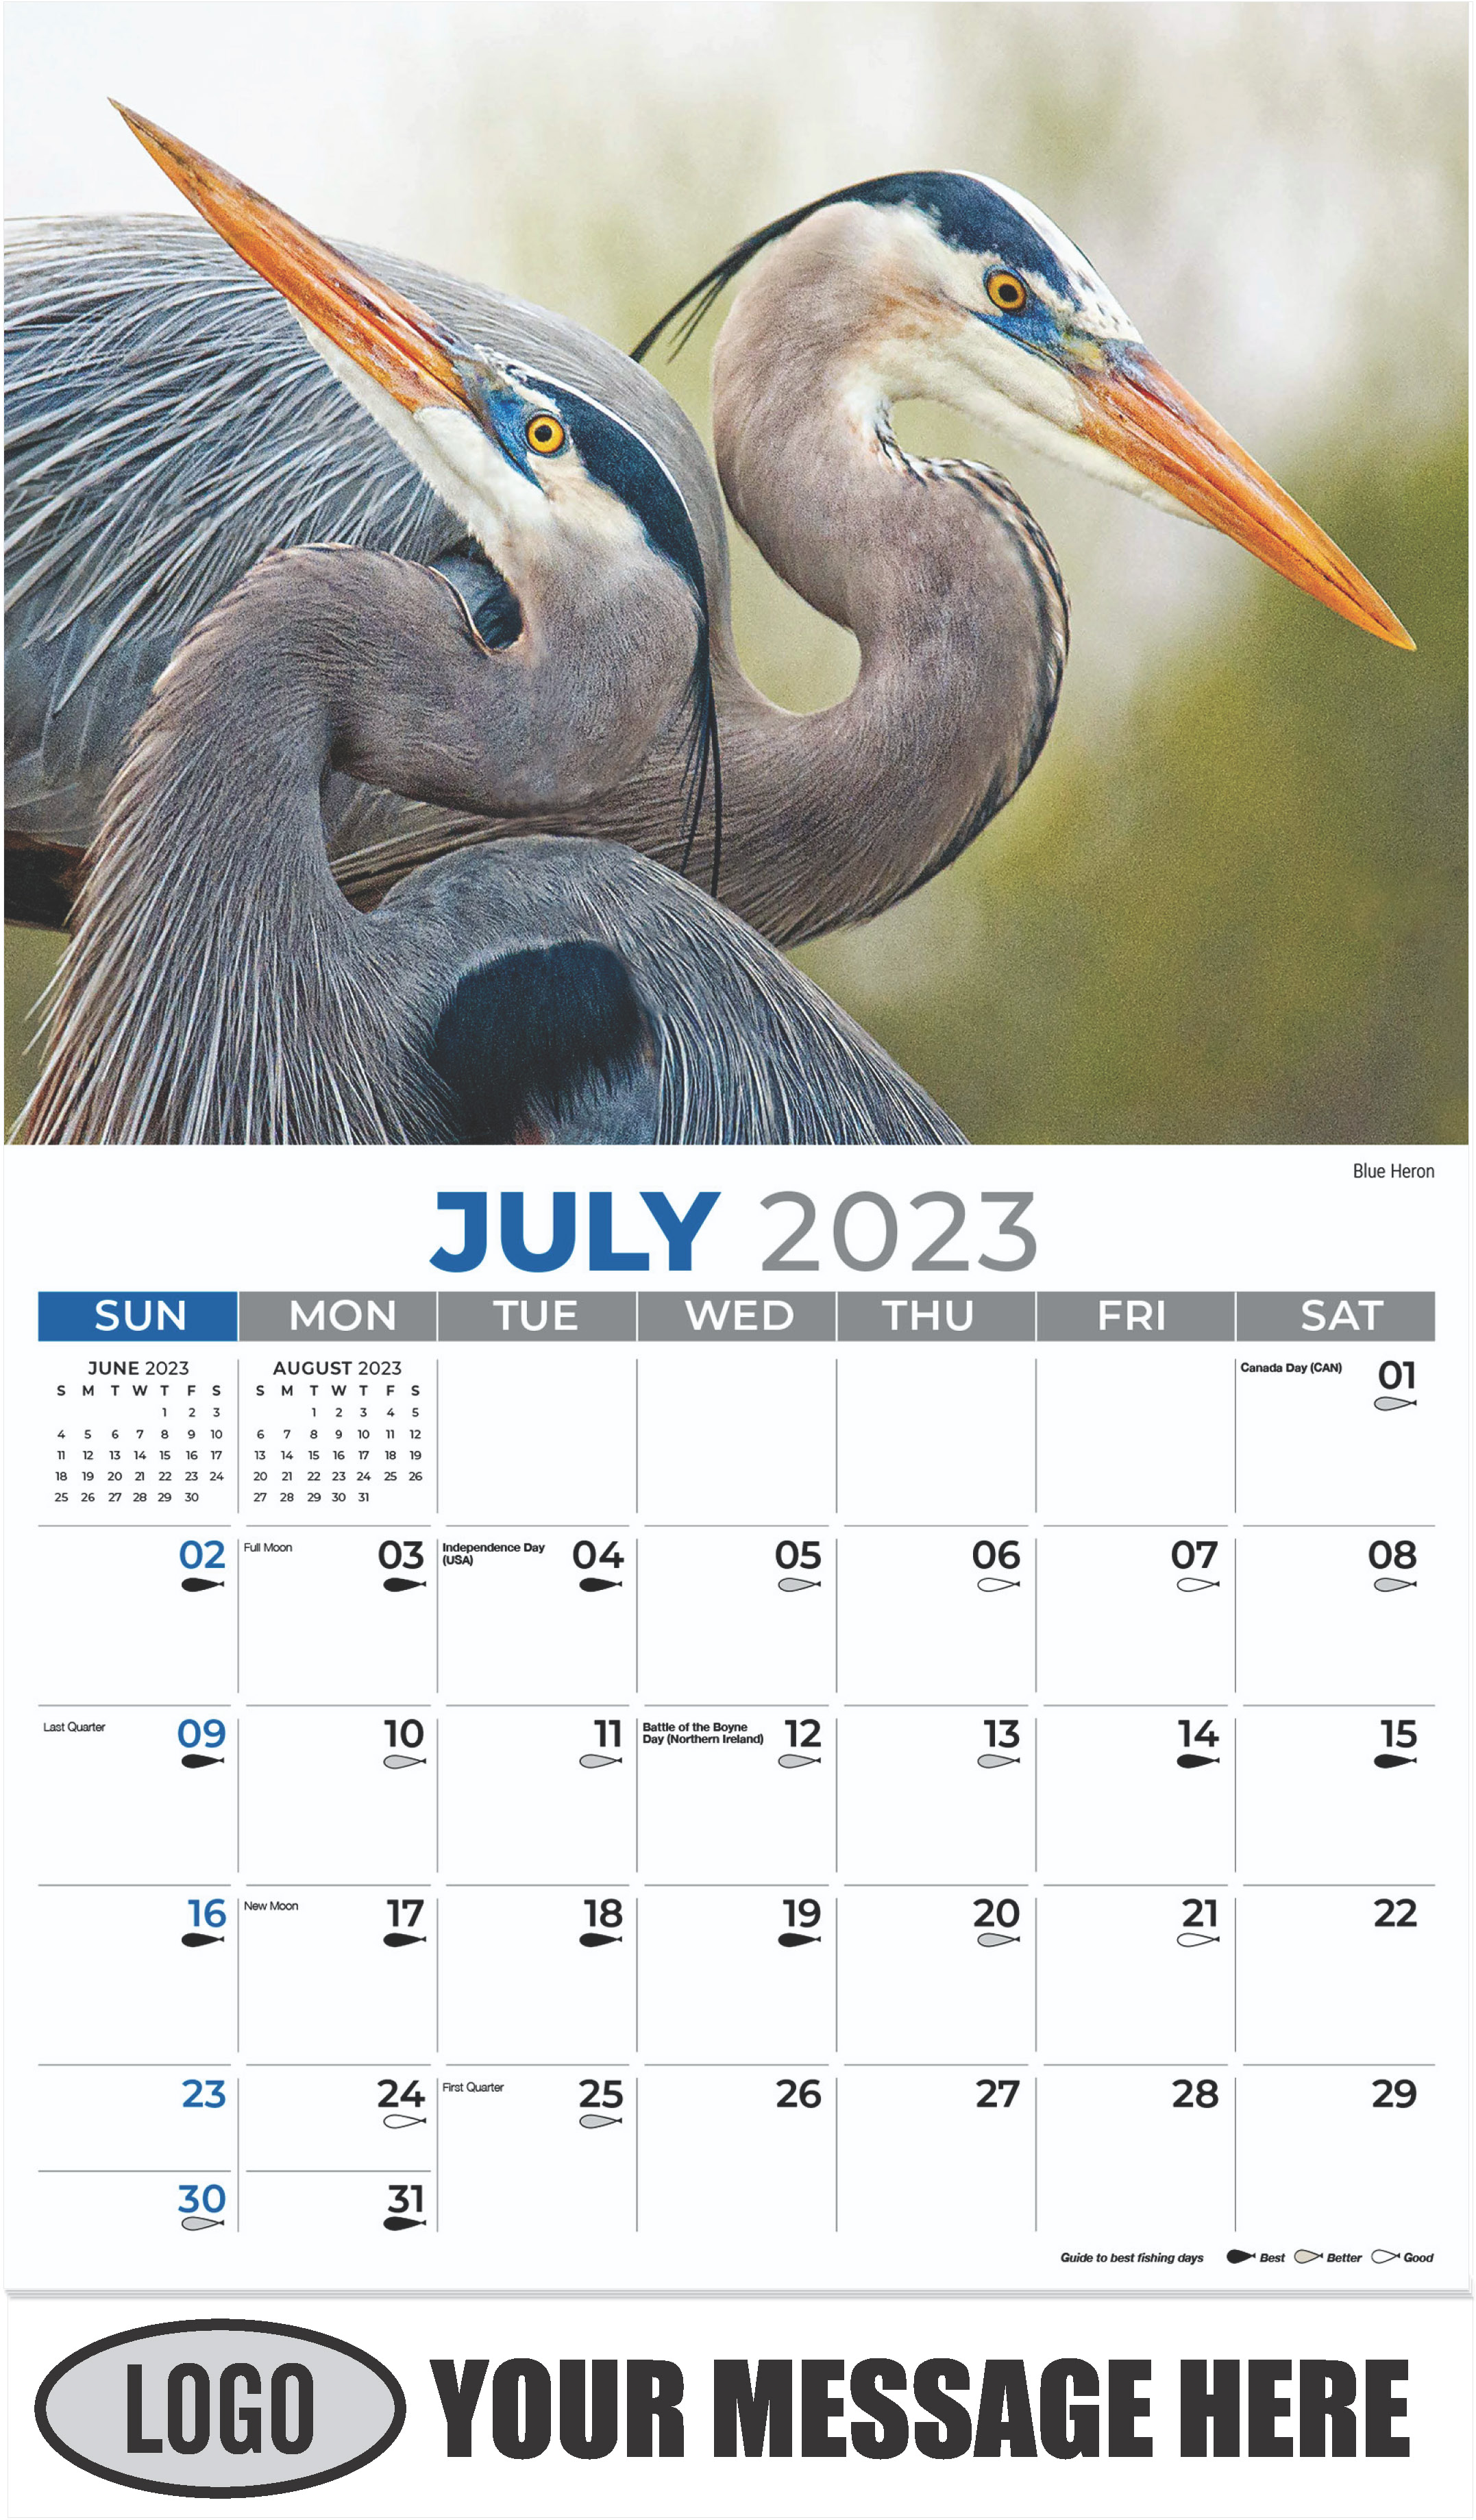 Blue Heron - July - North American Wildlife 2023 Promotional Calendar